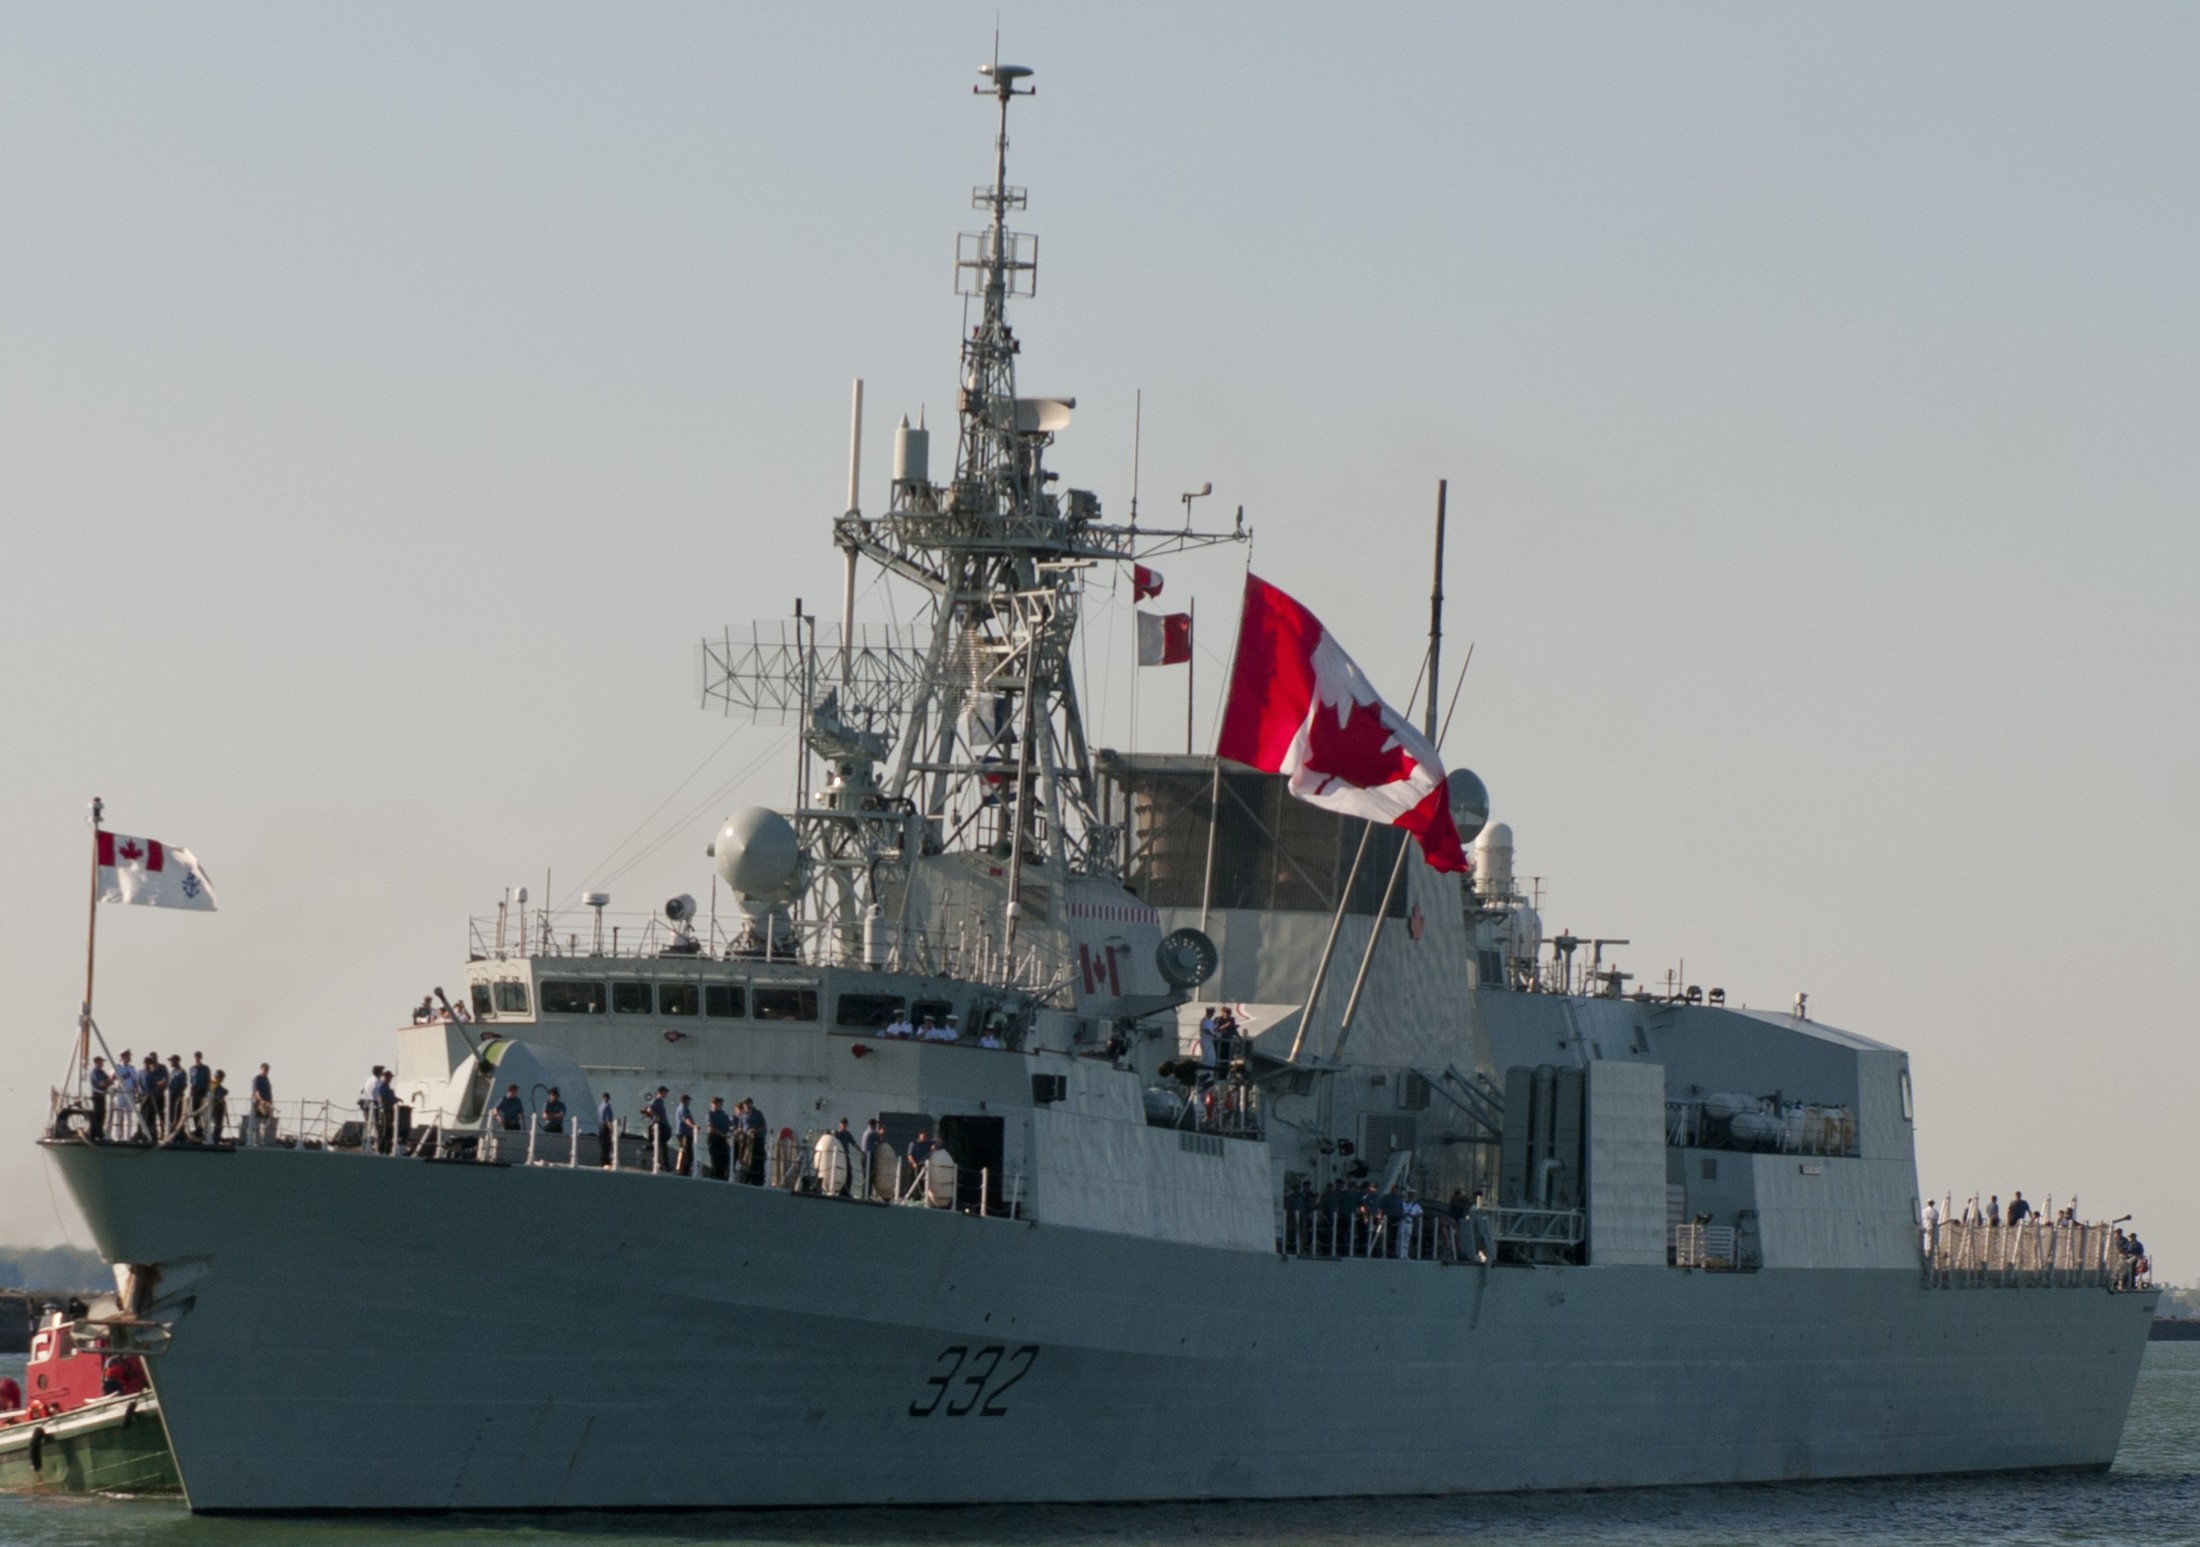 ffh-332 hmcs ville de quebec halifax class helicopter patrol frigate ncsm royal canadian navy 21